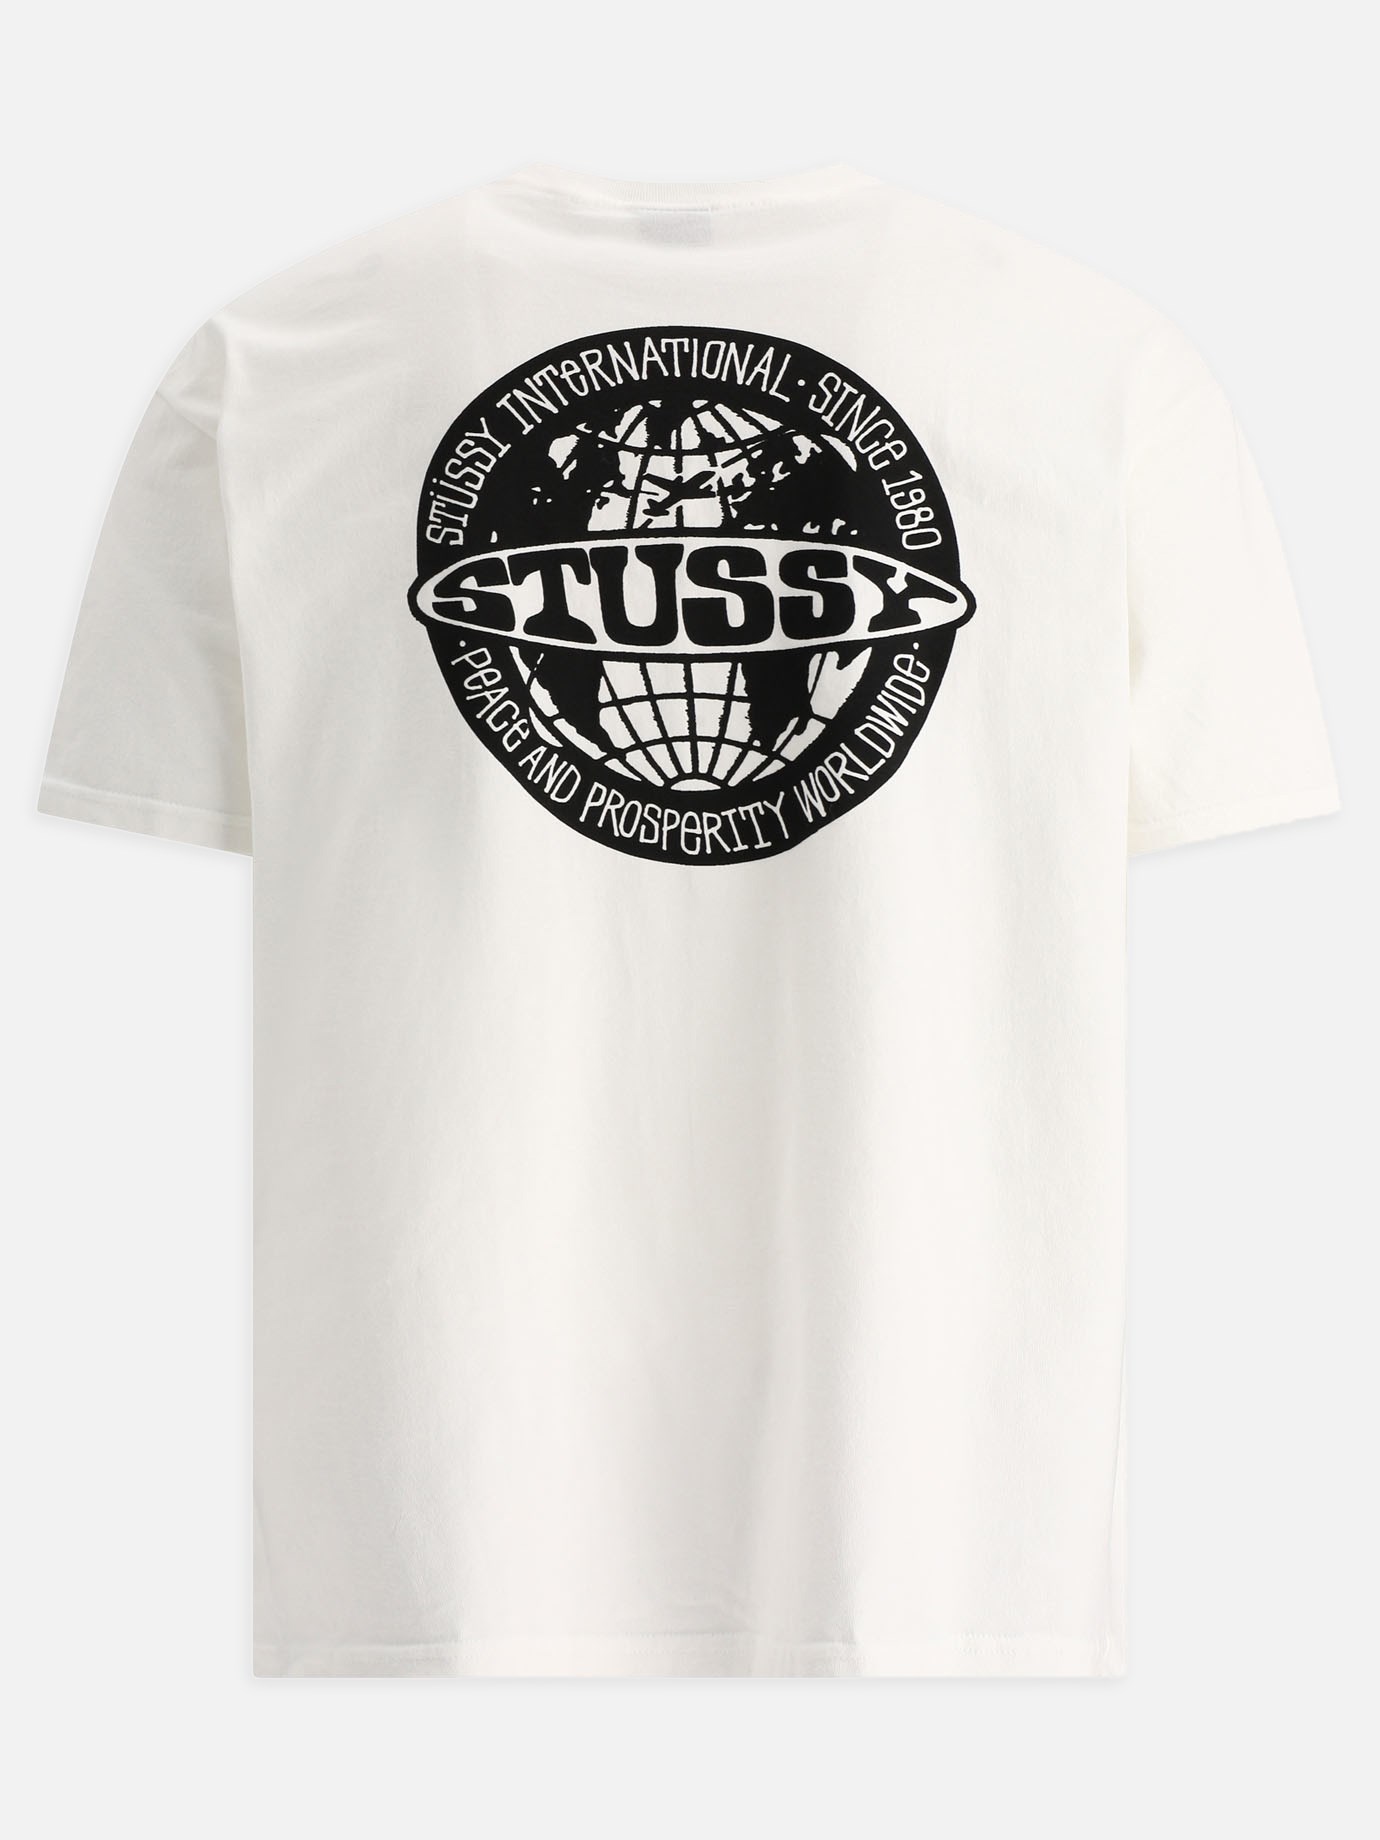  Worldwide Dot  t-shirt by Stüssy